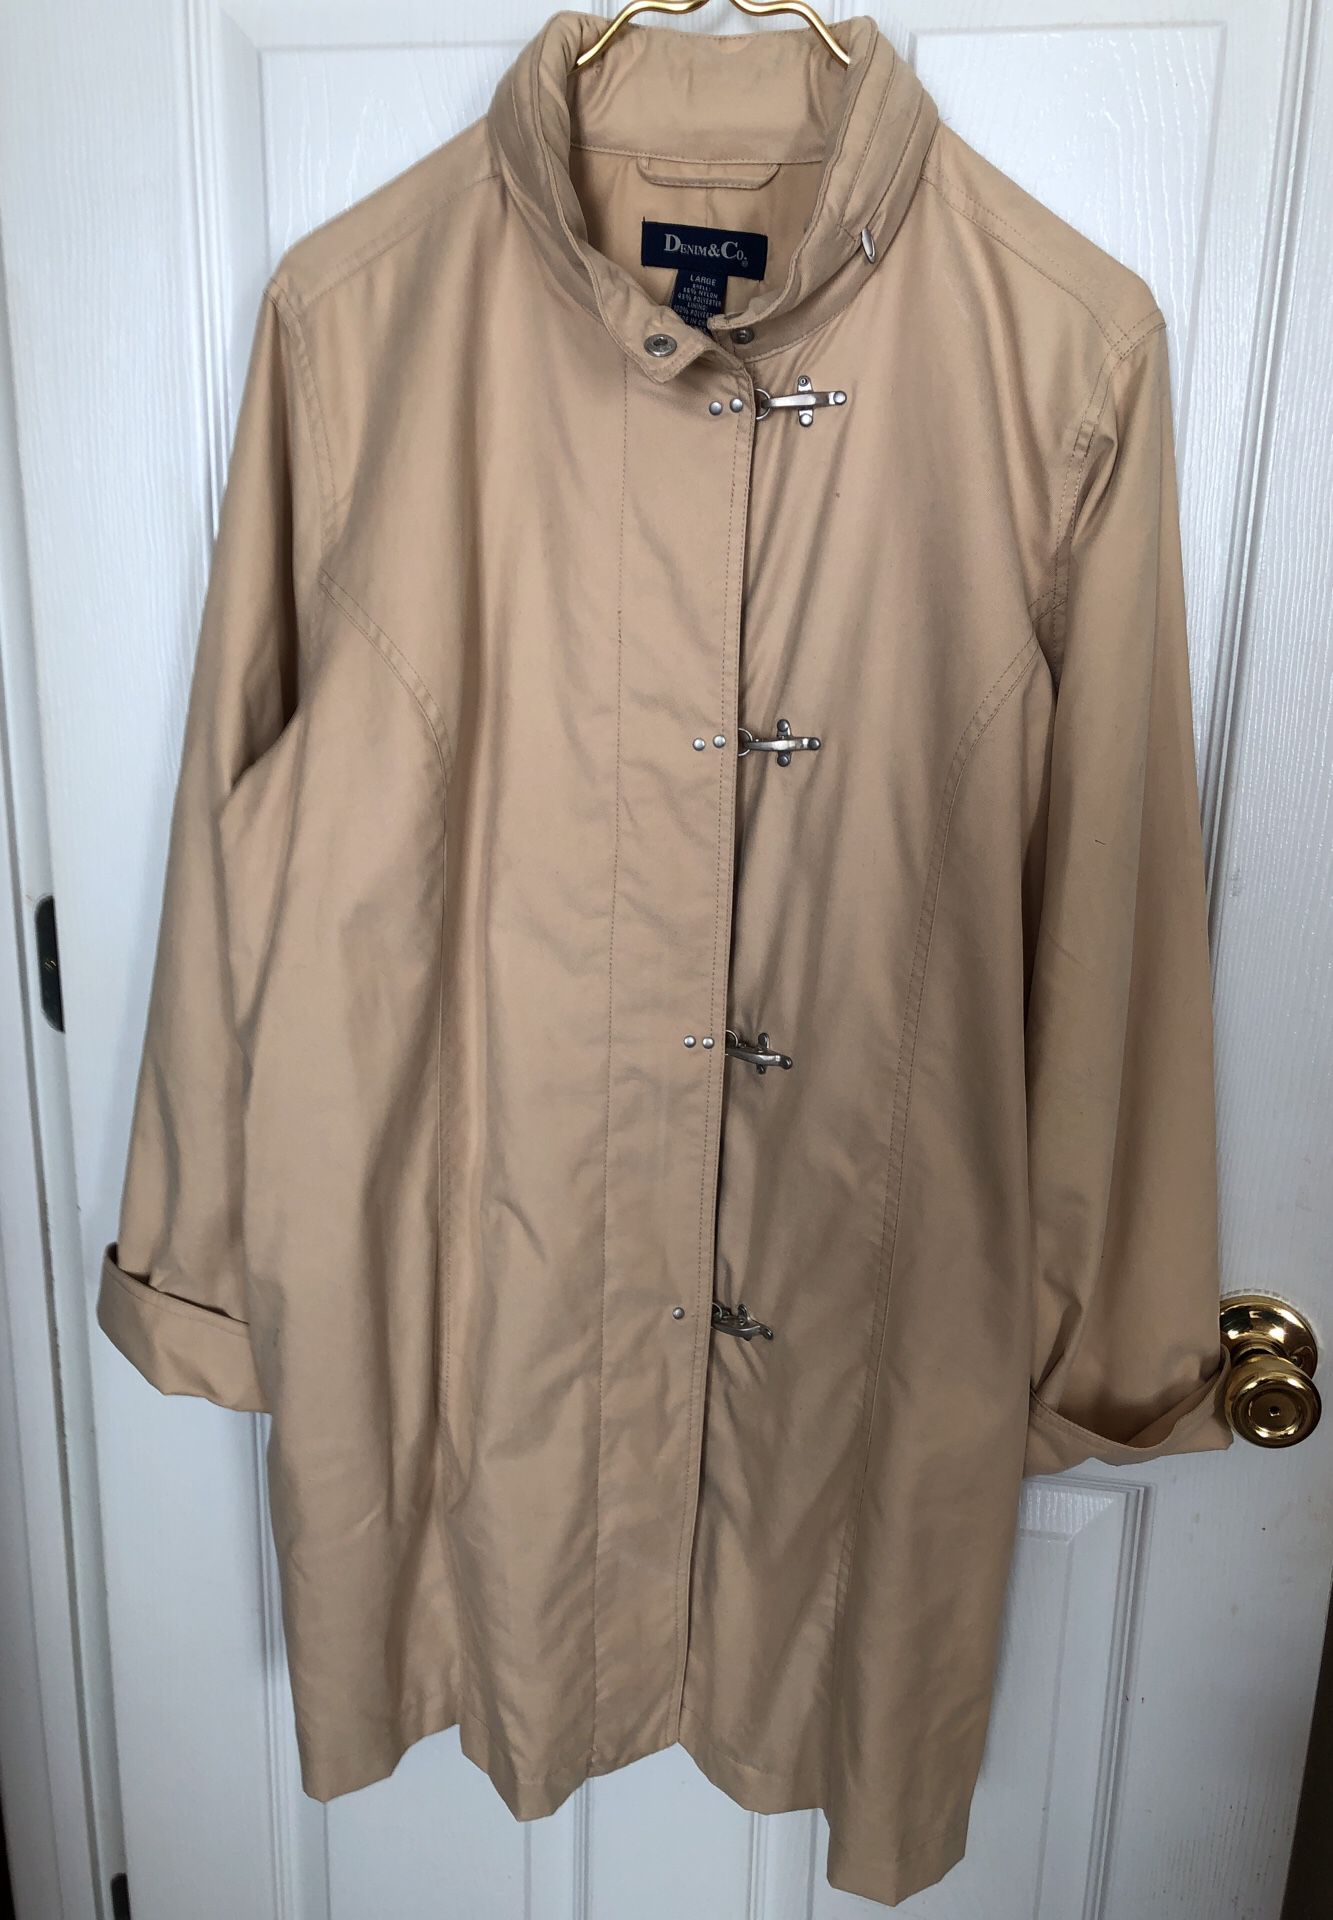 Denim and Co. Raincoat size large. never worn, hood inside zippered collar